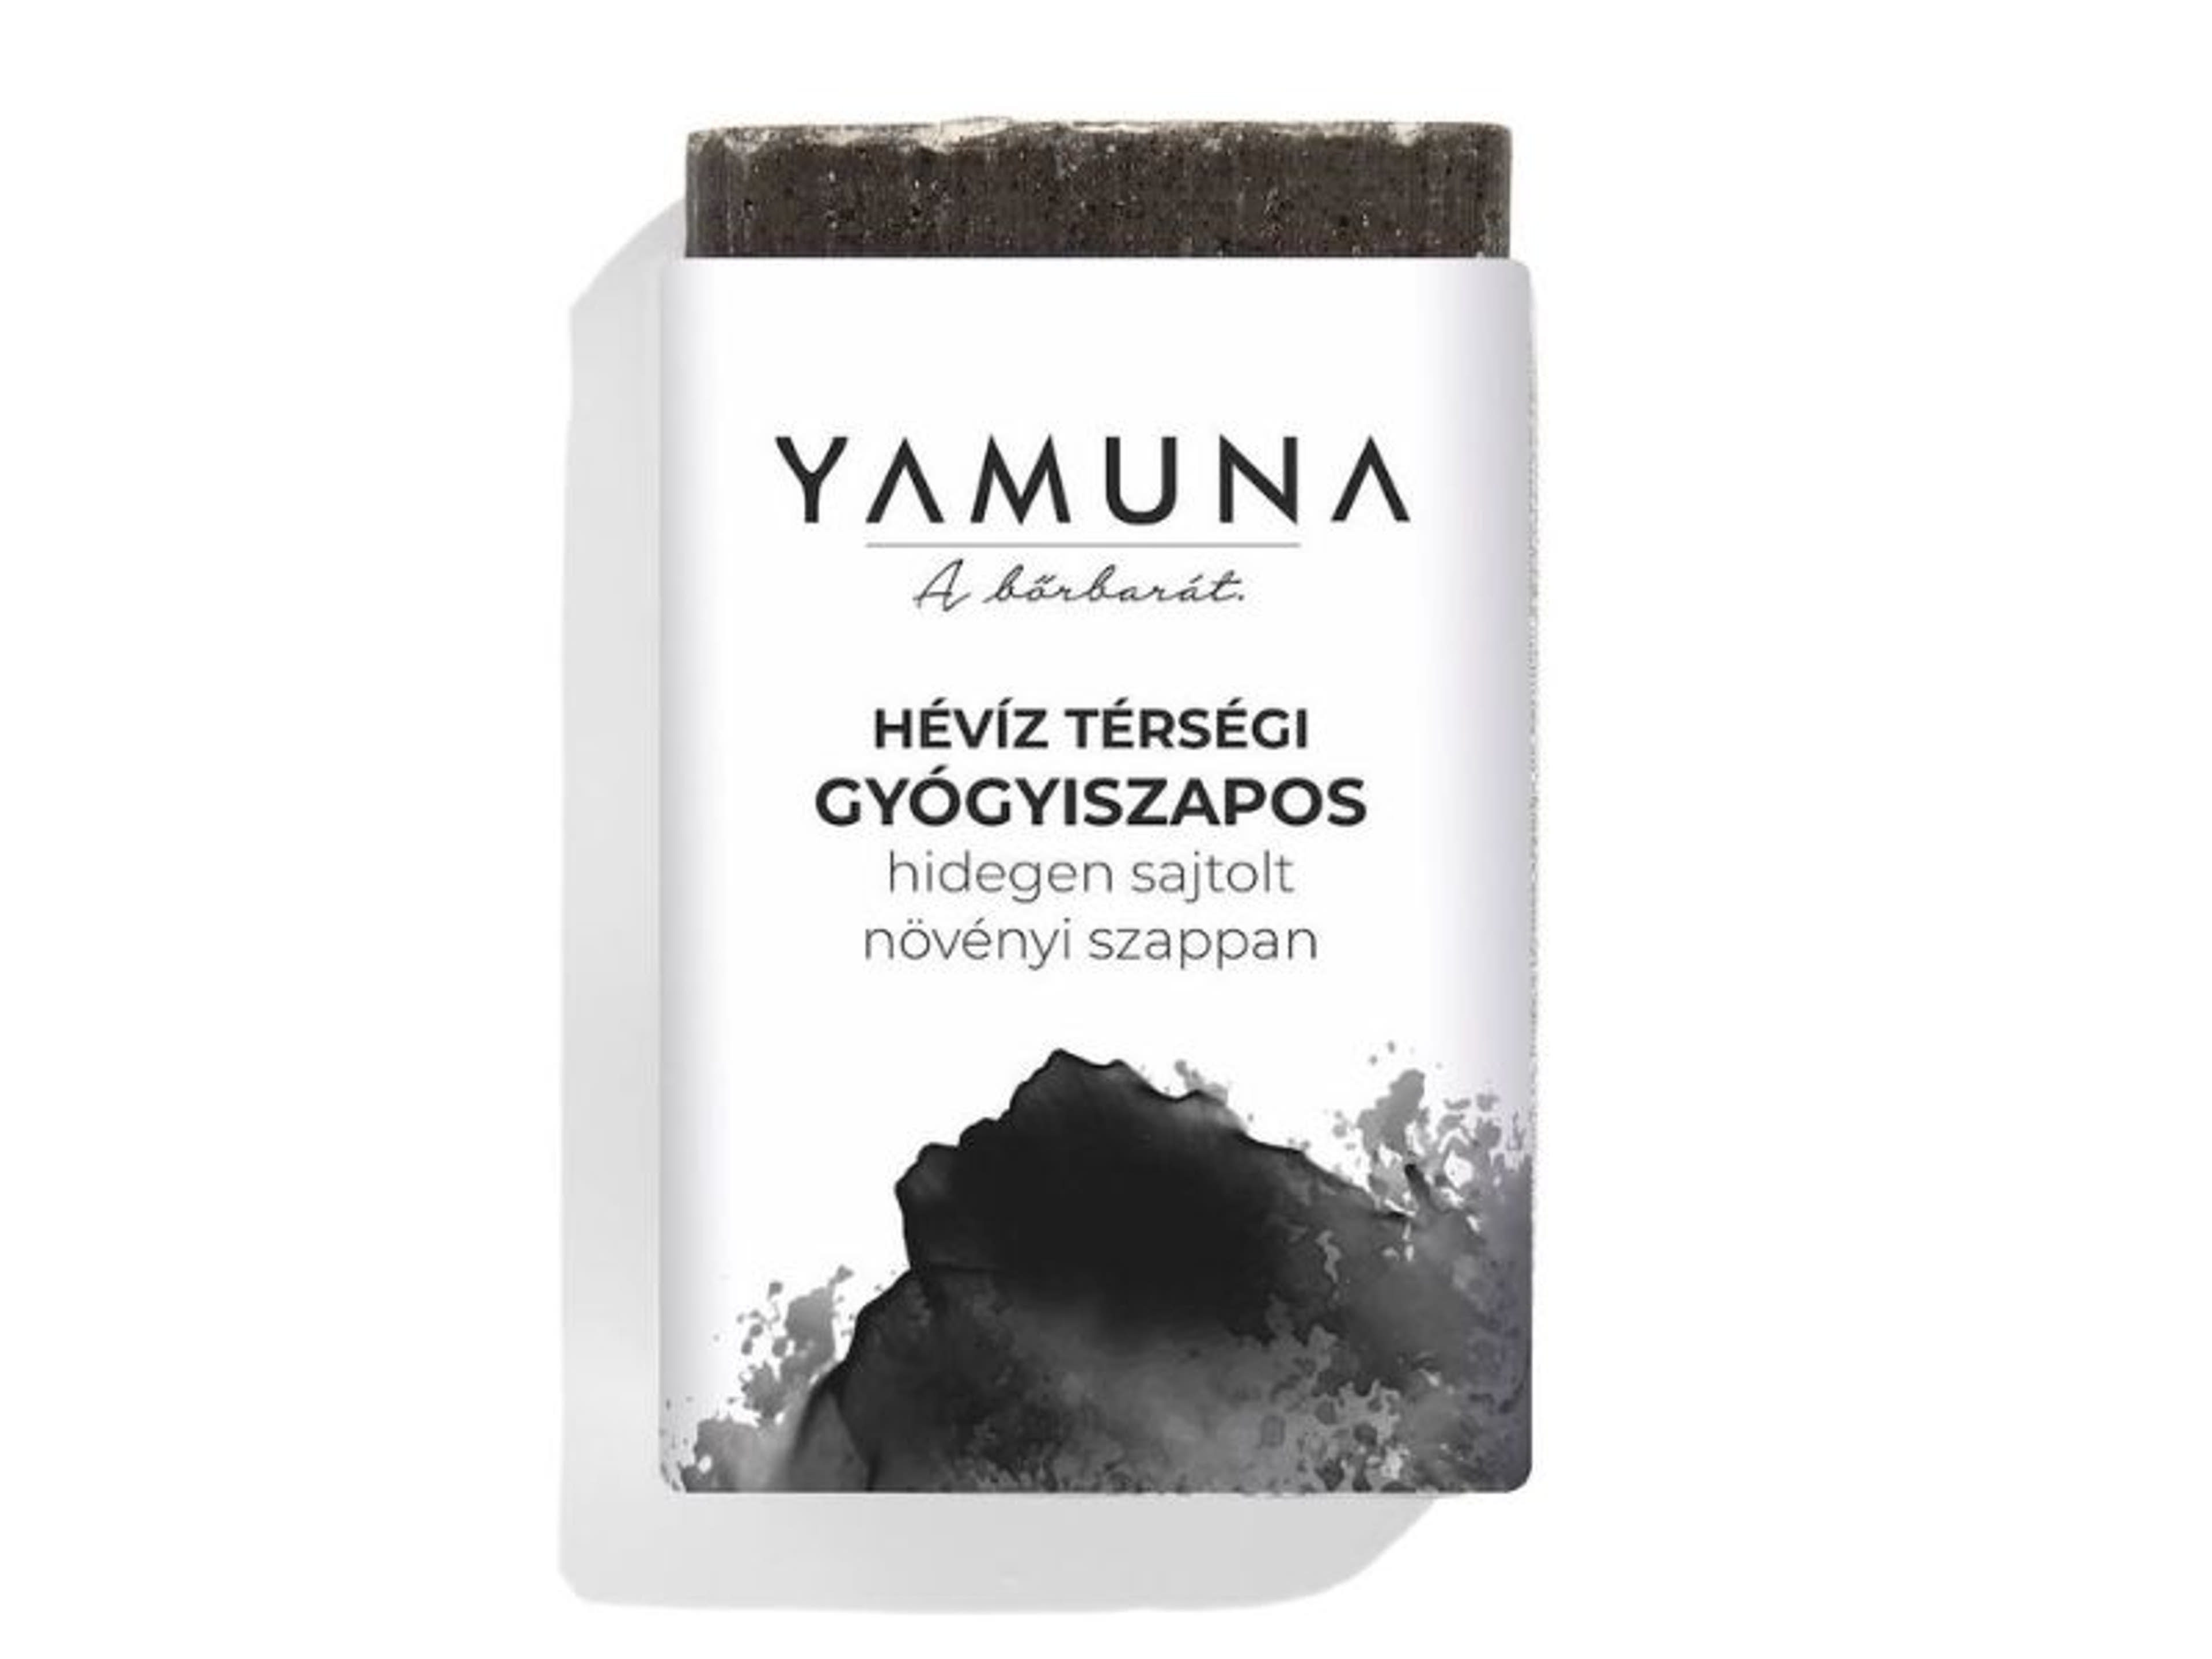 Yamuna fekete szappan hévizi gyógyiszappal - 110 g